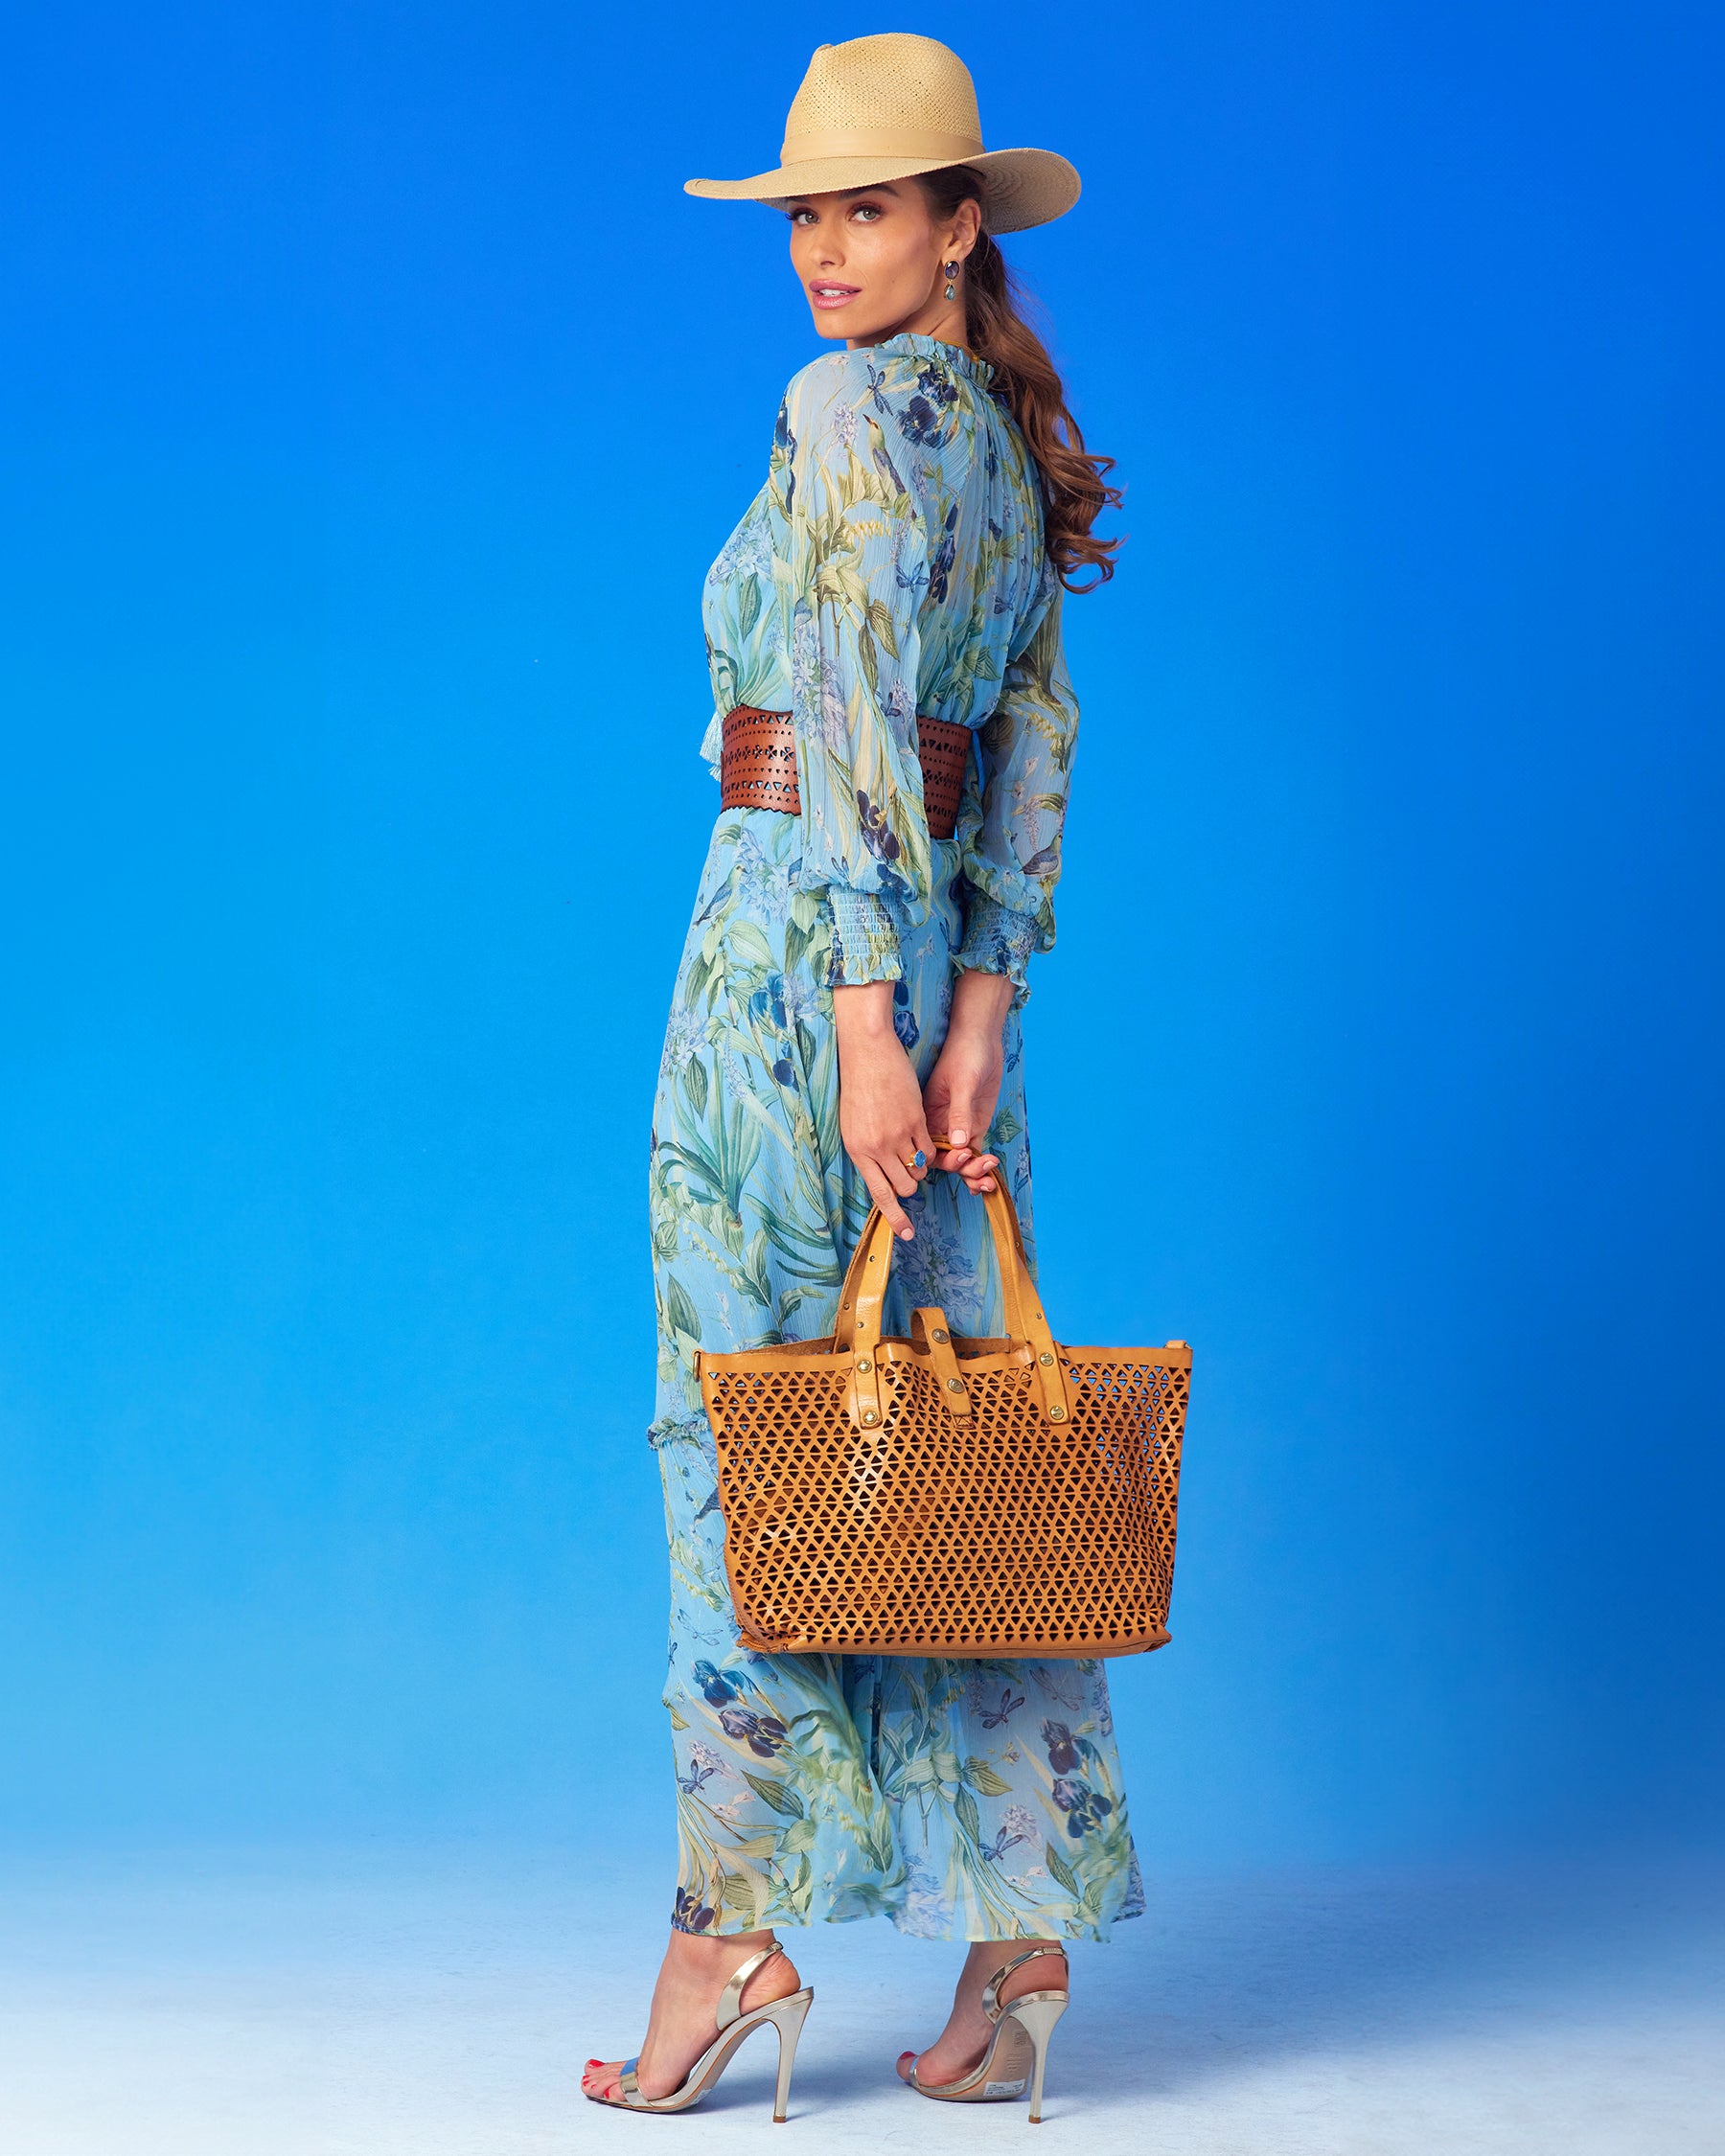 Campomaggi Malibu Pyramid Cut Tote Bag in Tan worn with the Celine Maxi Crinkle Chiffon Dress in Magical Garden